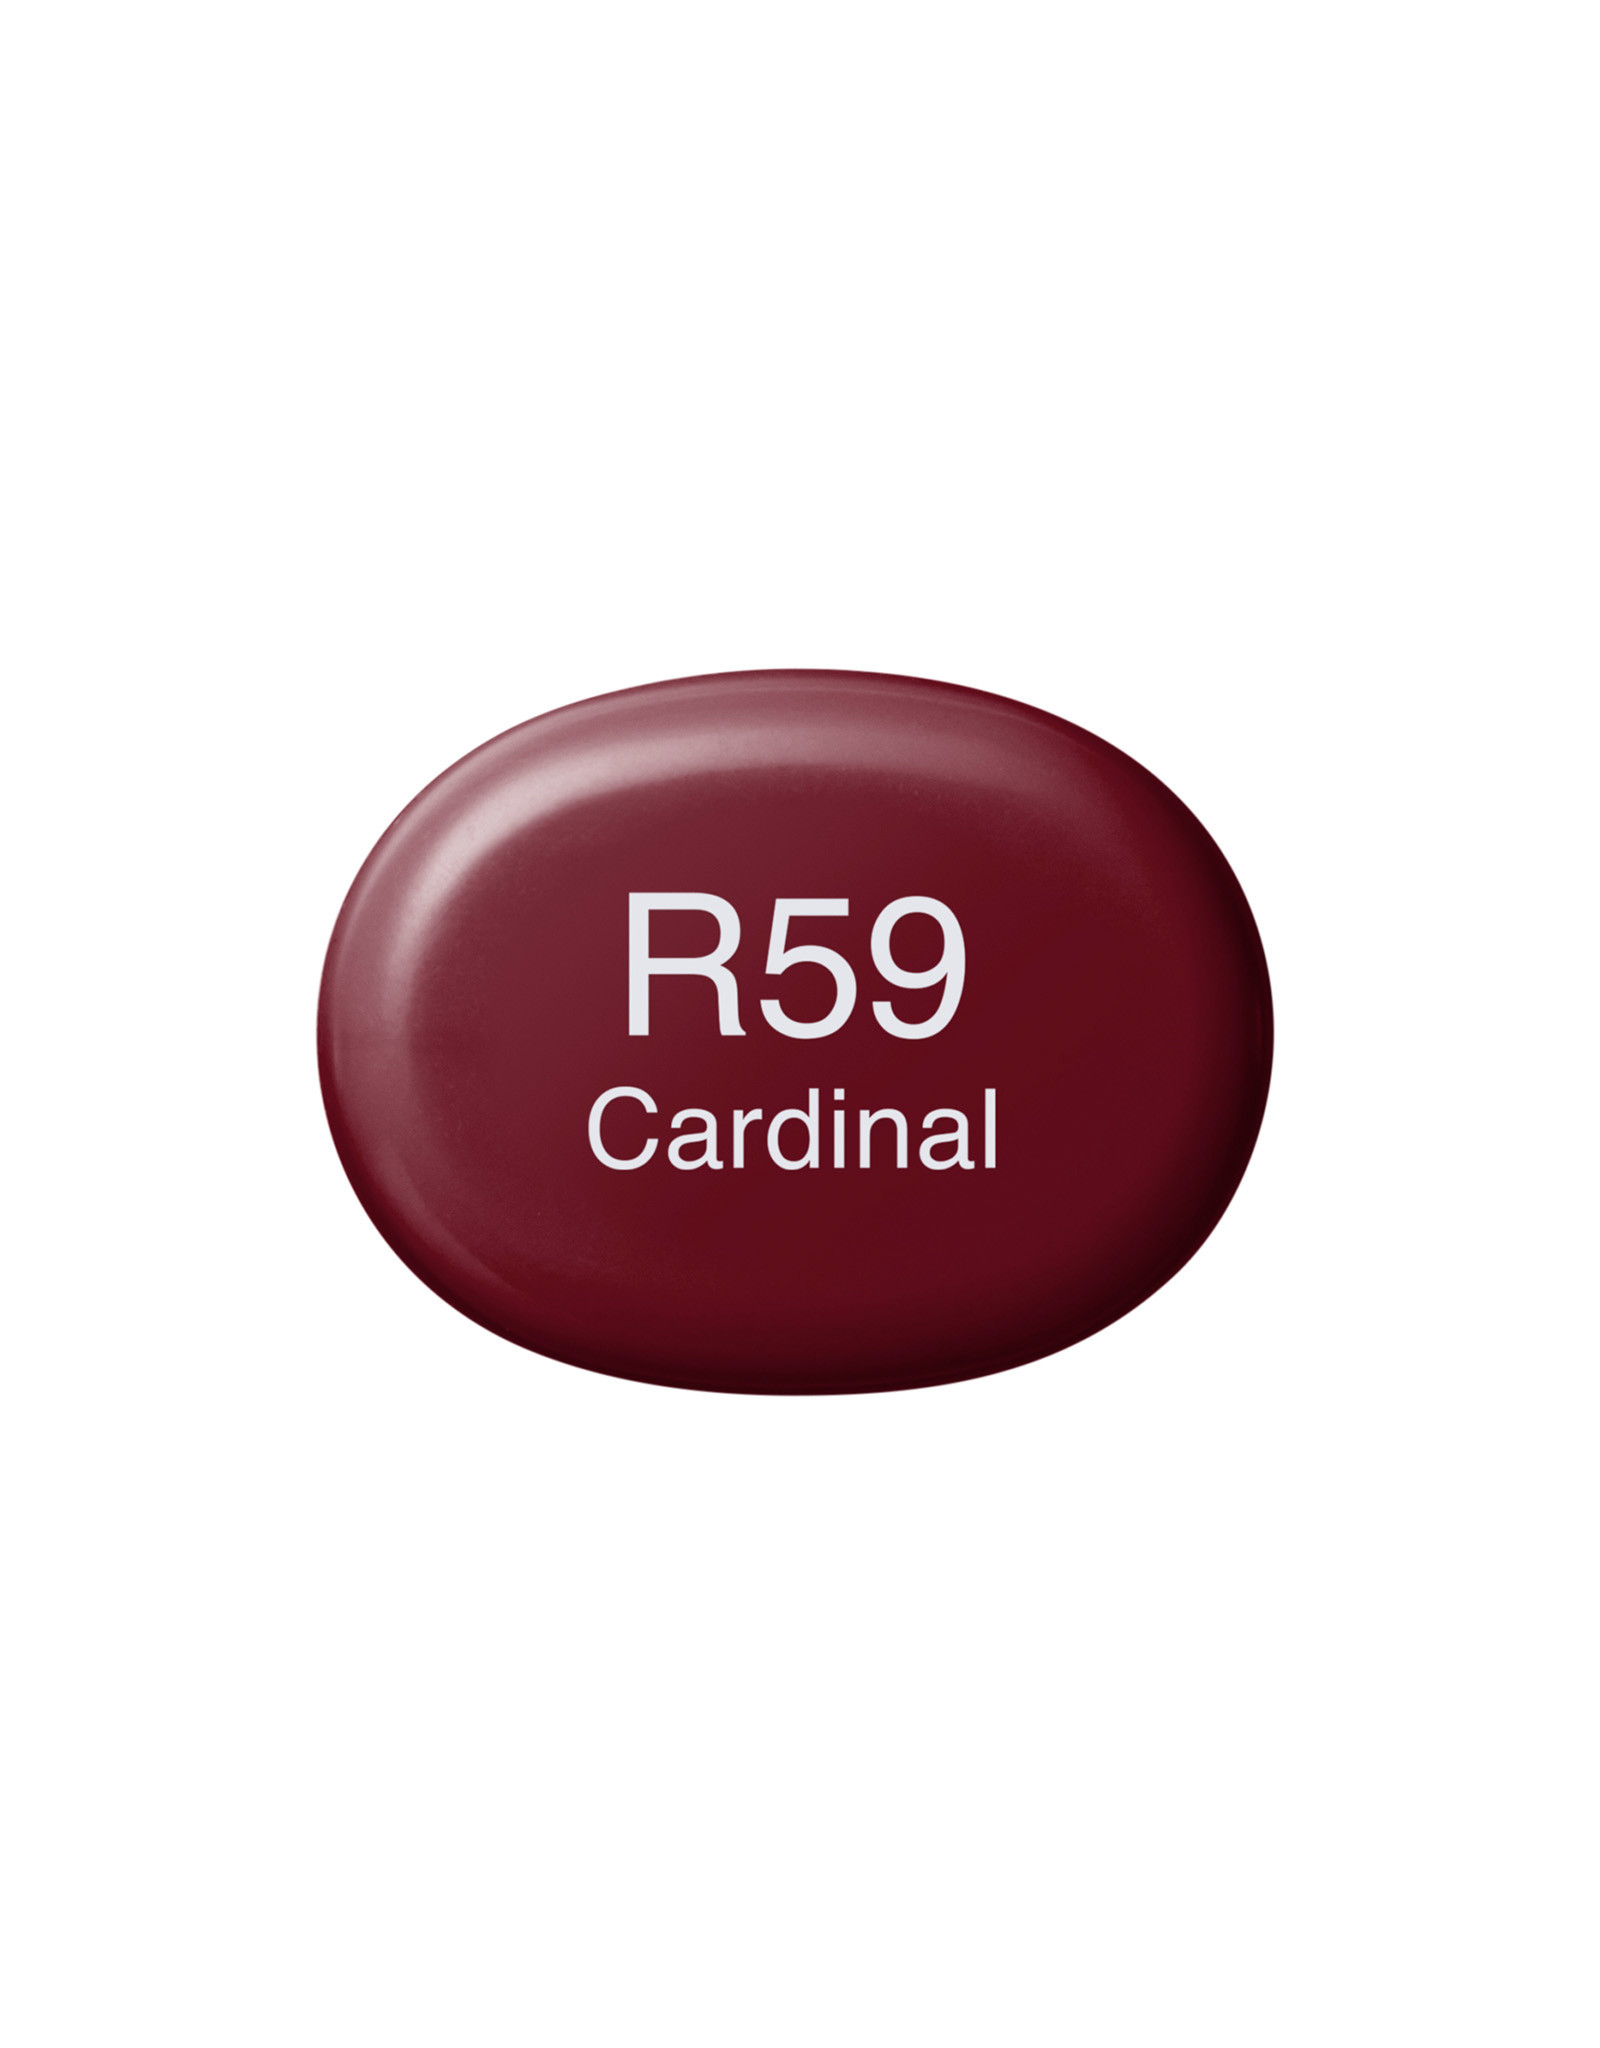 COPIC COPIC Sketch Marker R59 Cardinal